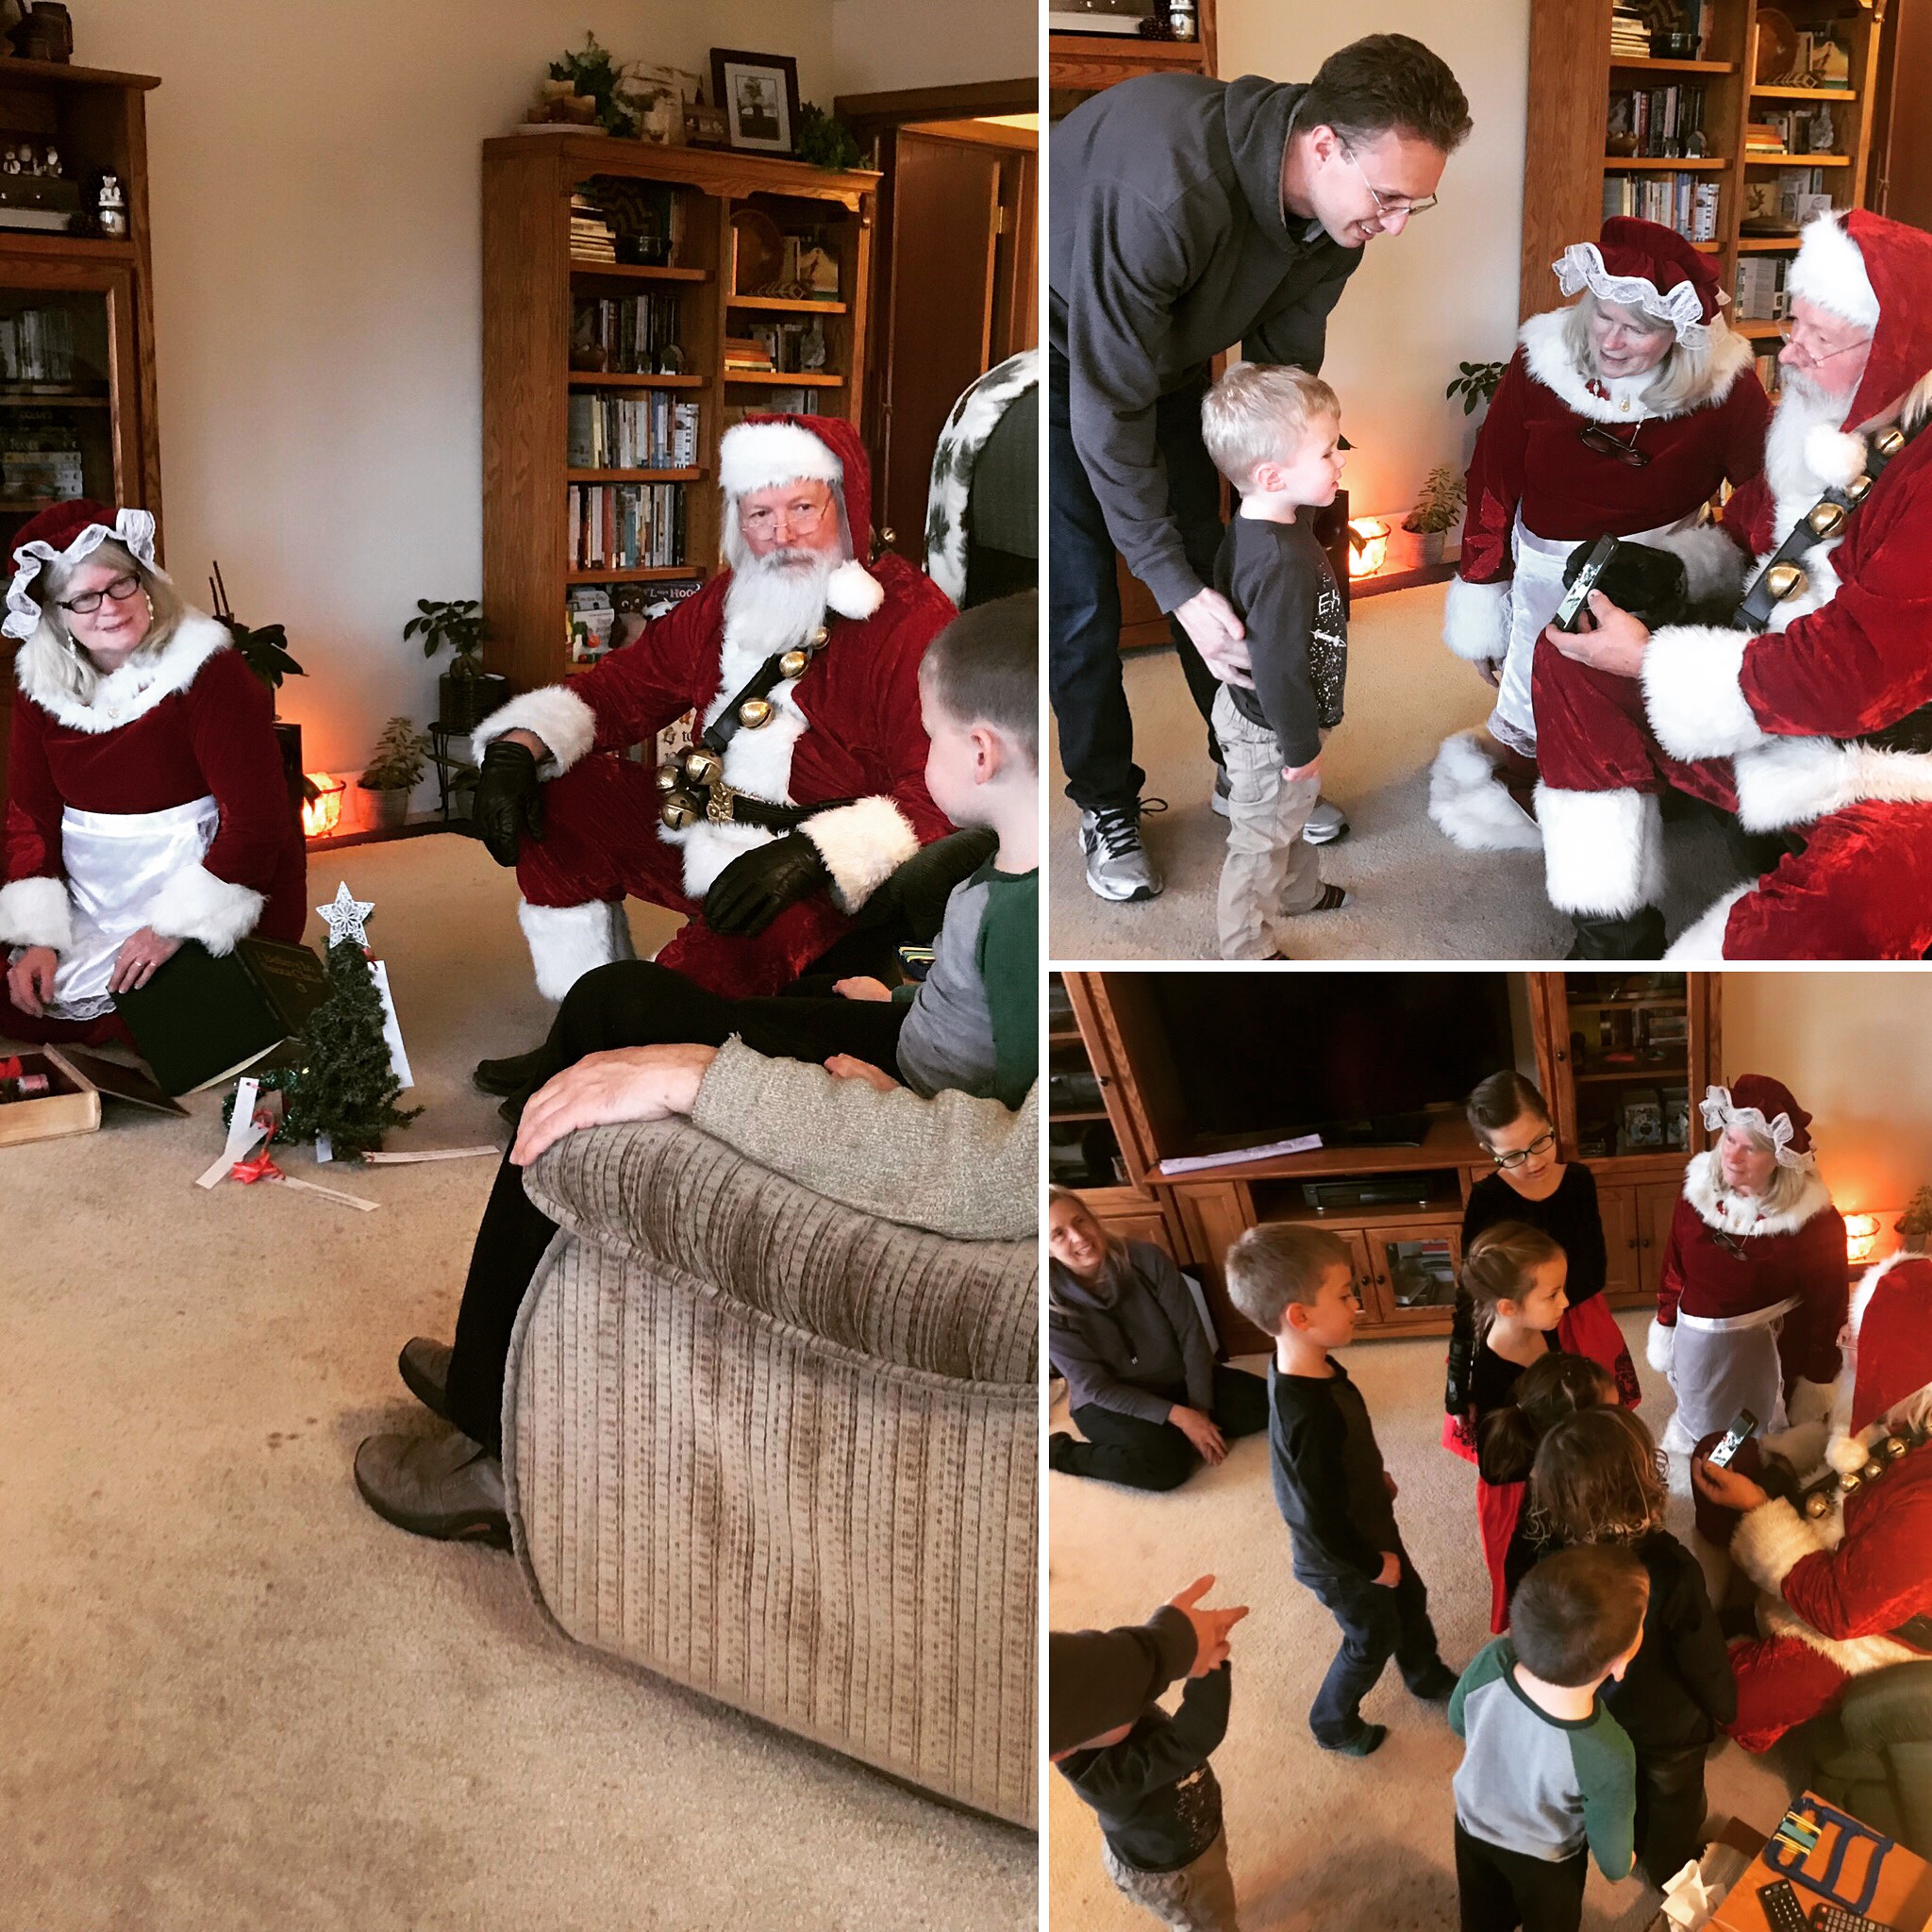 Meeting Santa and Mrs. Claus